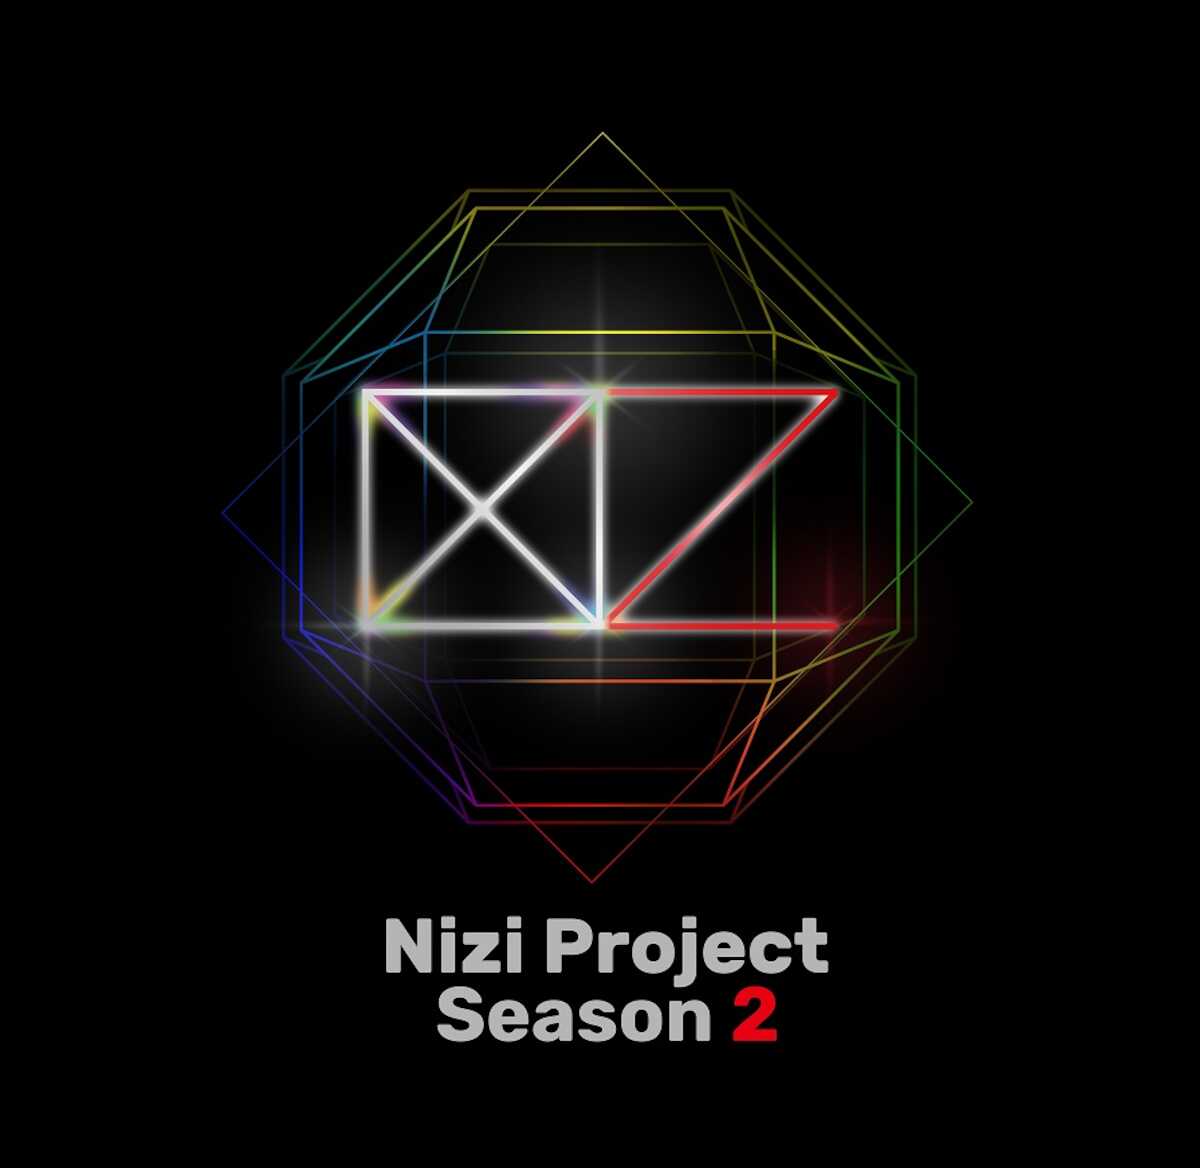 「Nizi Project Season 2」トモヤチームとケンチームが激突!勝負の行方は…